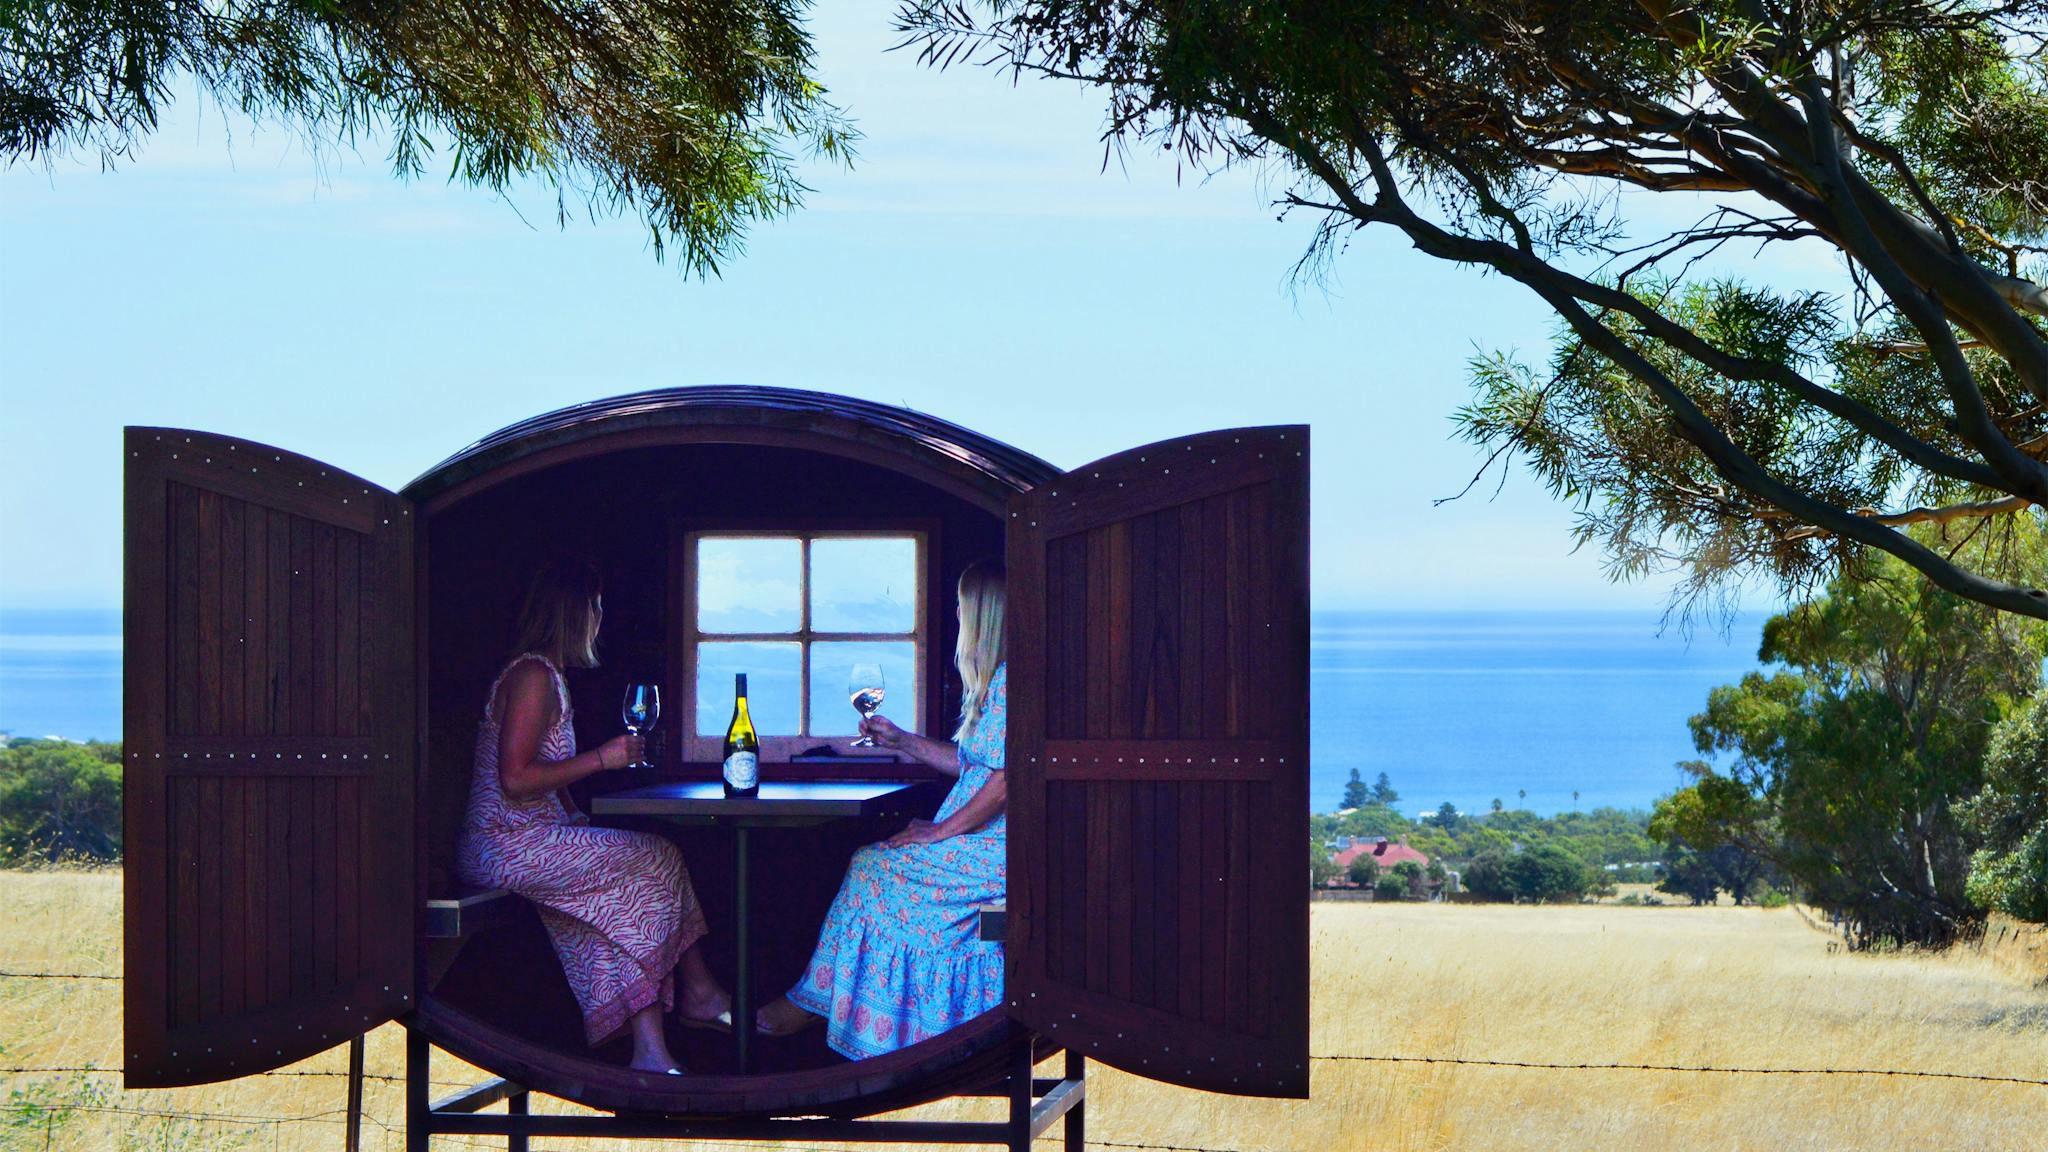 Two ladies drinking wine inside a giant wine barrel tasting pod, overlooking sea views